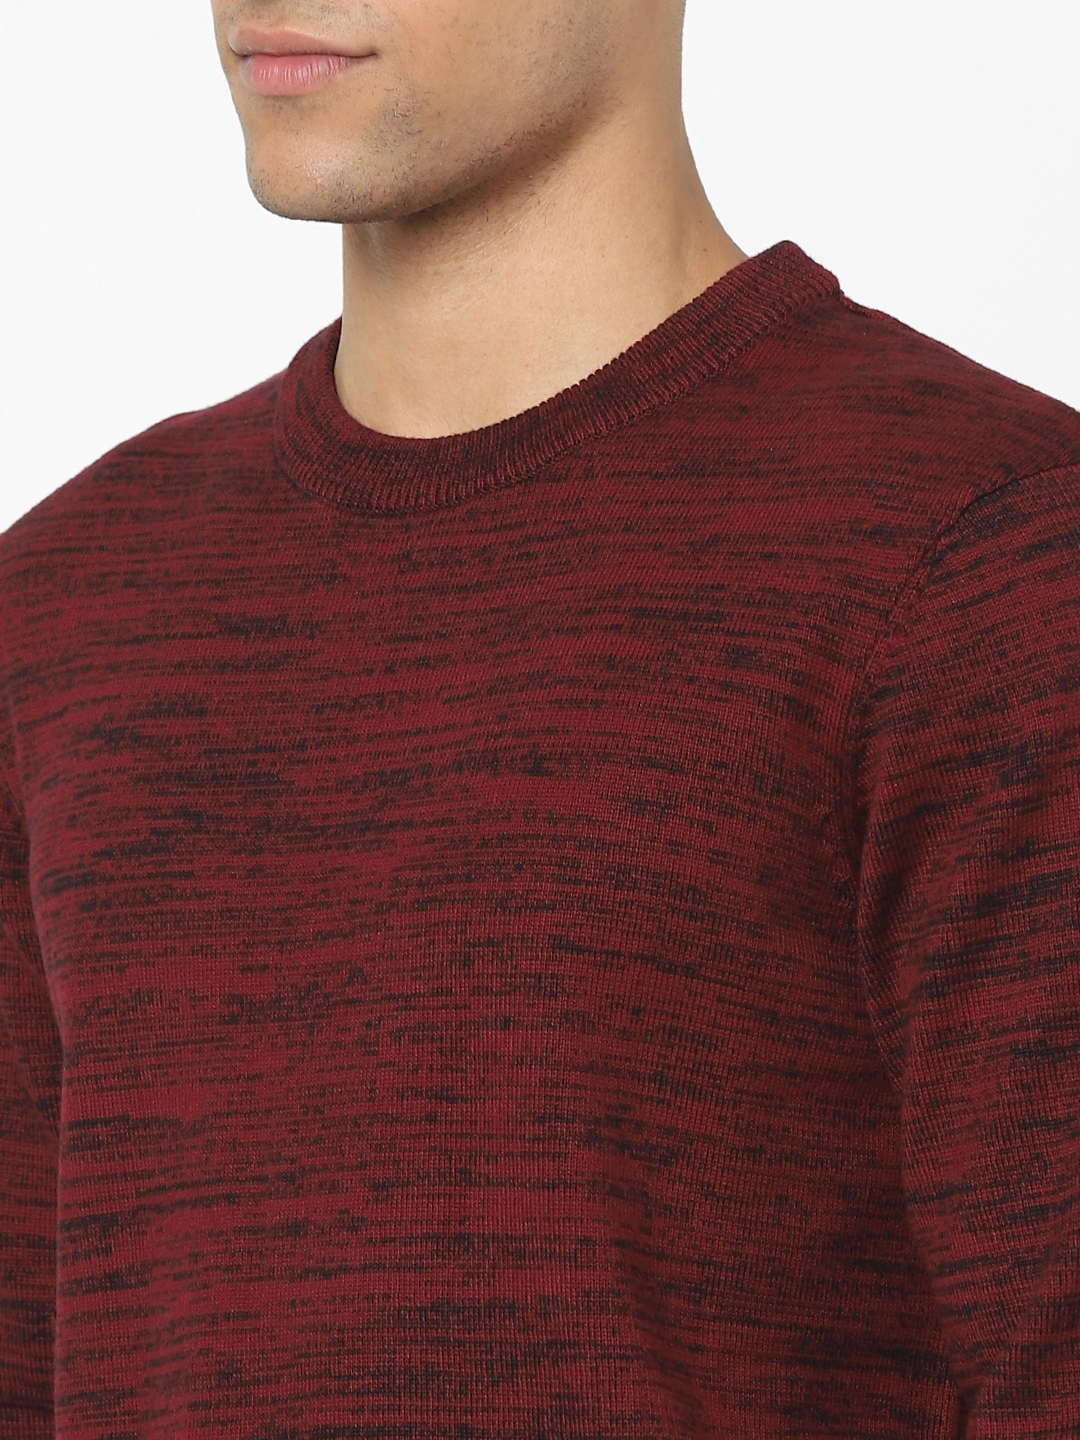 Men's Burgundy Textured Sweaters